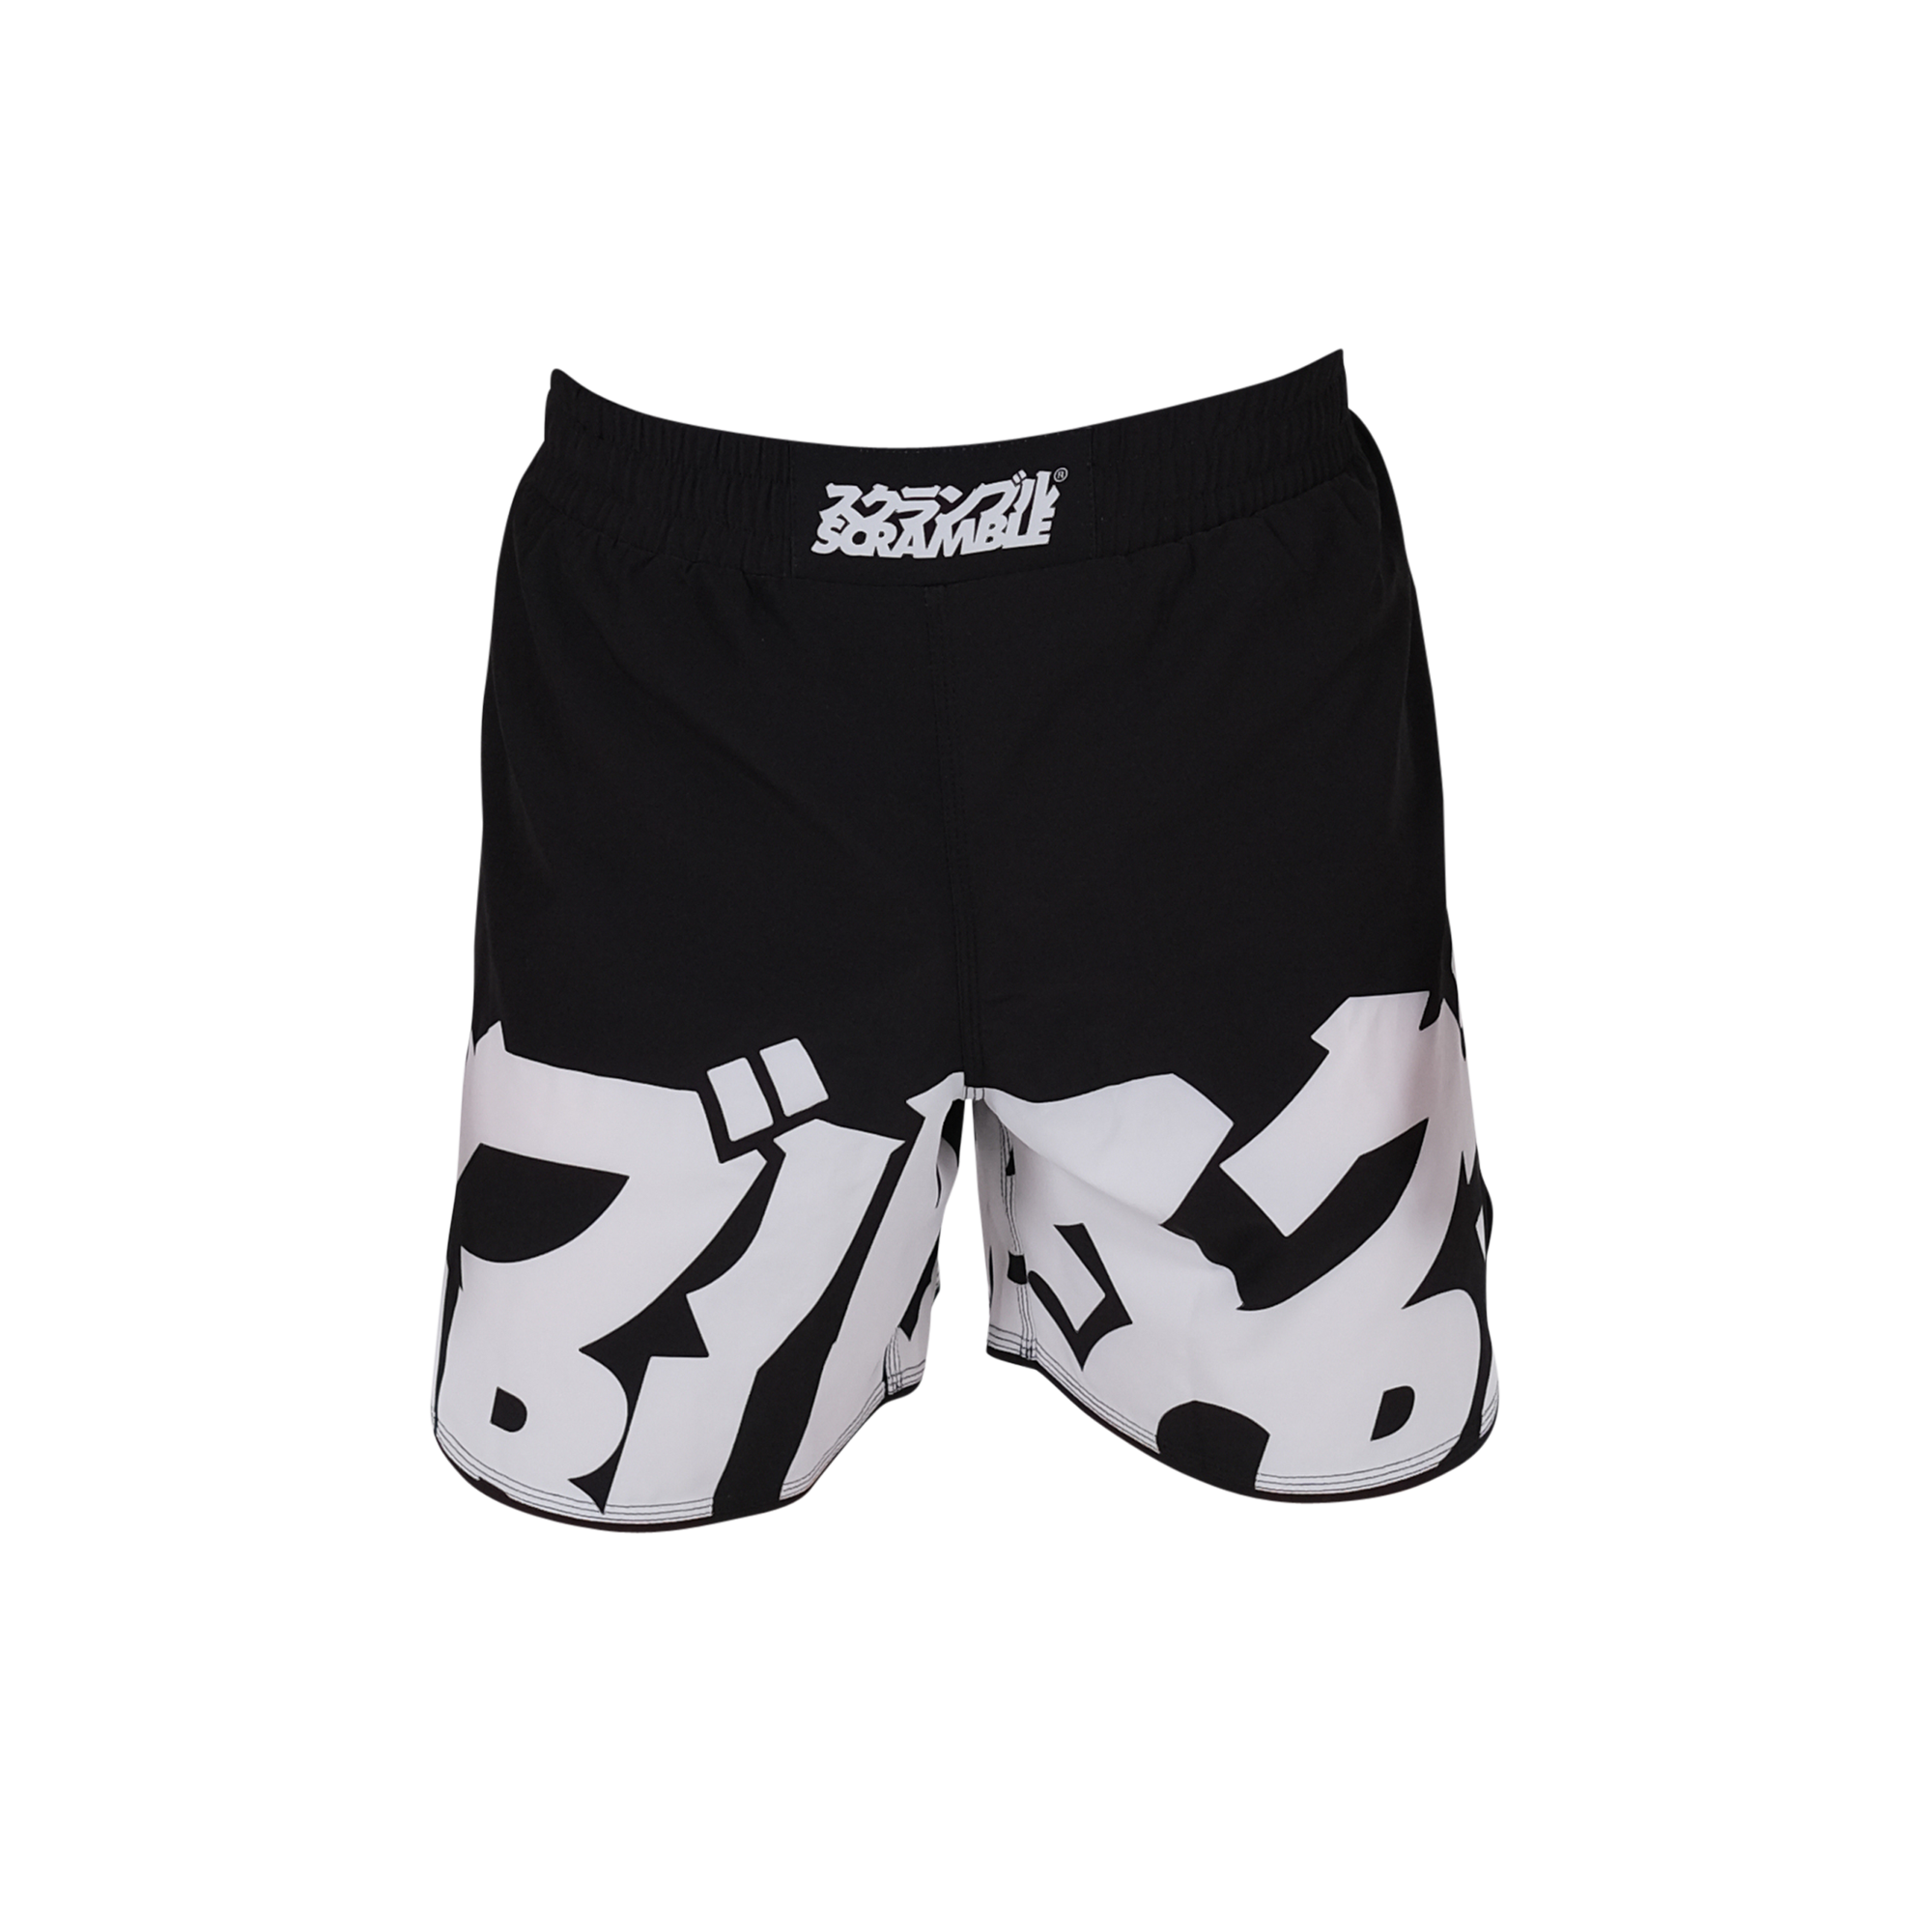 Baka Shorts – Scramble Brand USA